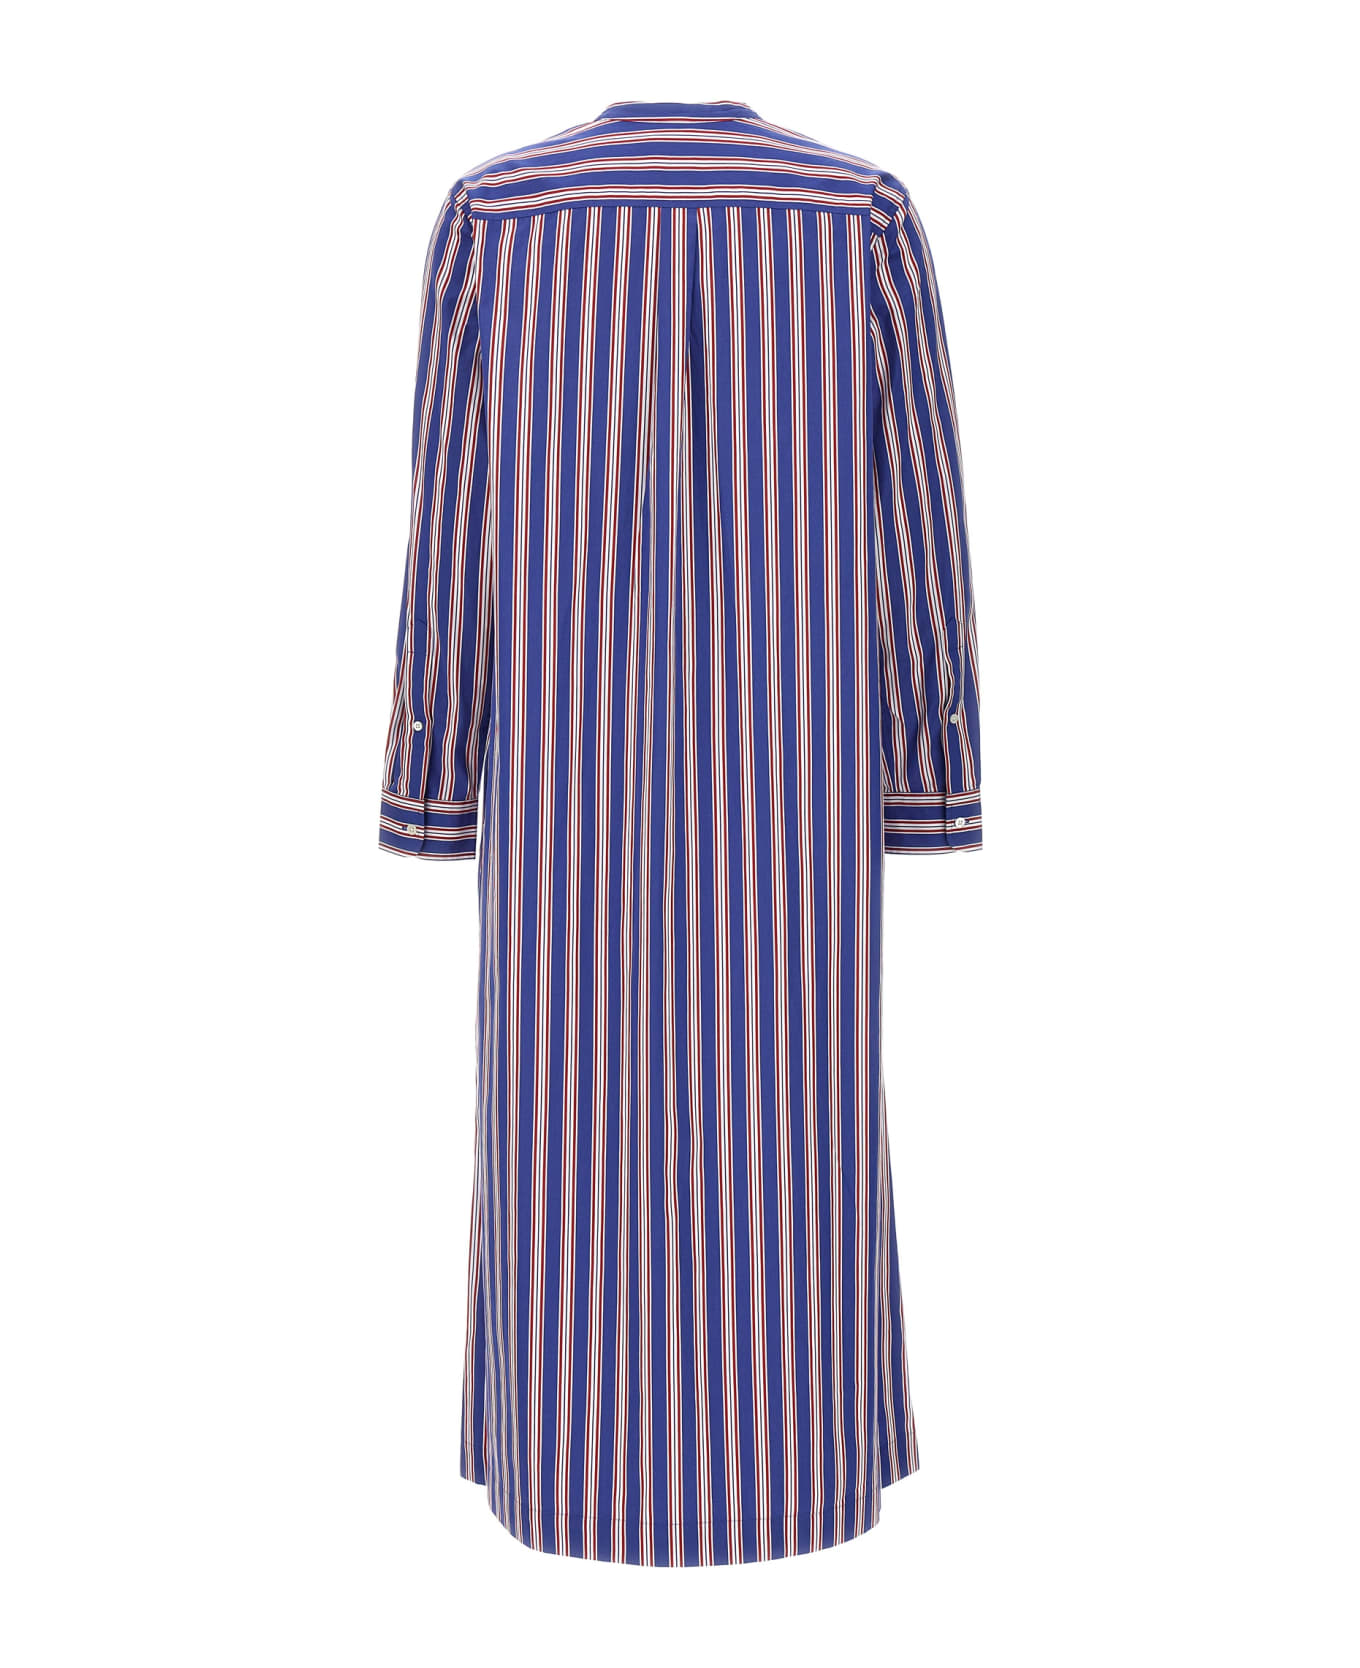 Polo Ralph Lauren Striped Dress - Multicolor